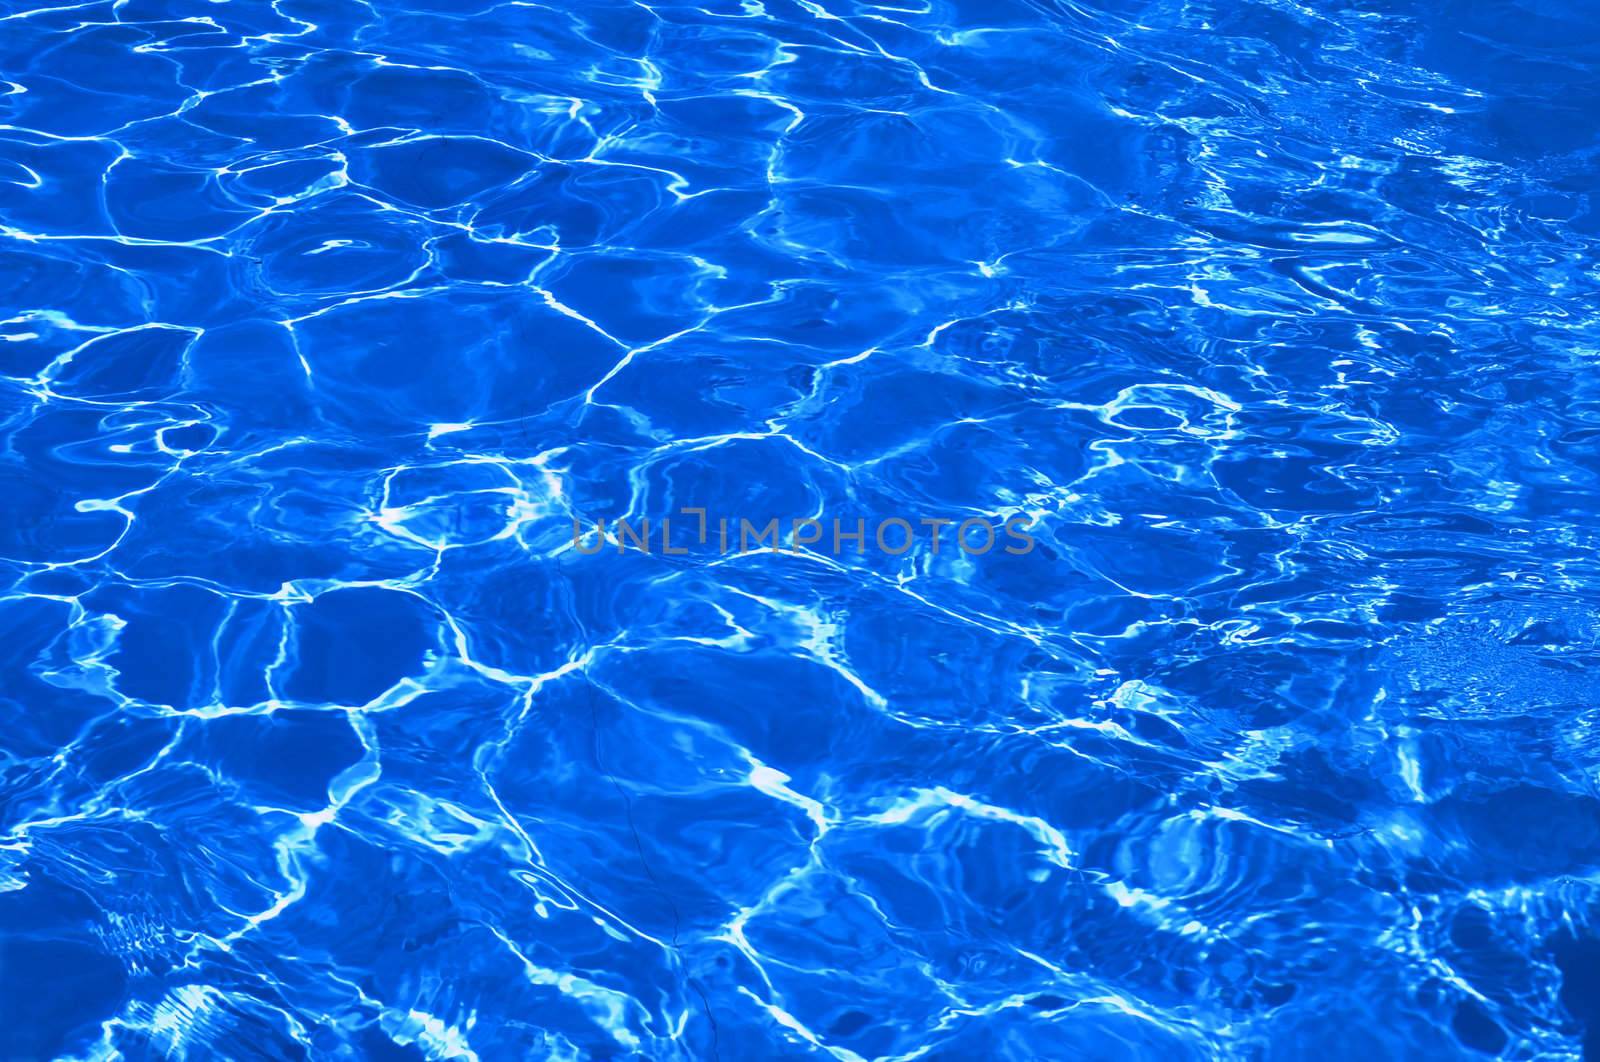 blue water